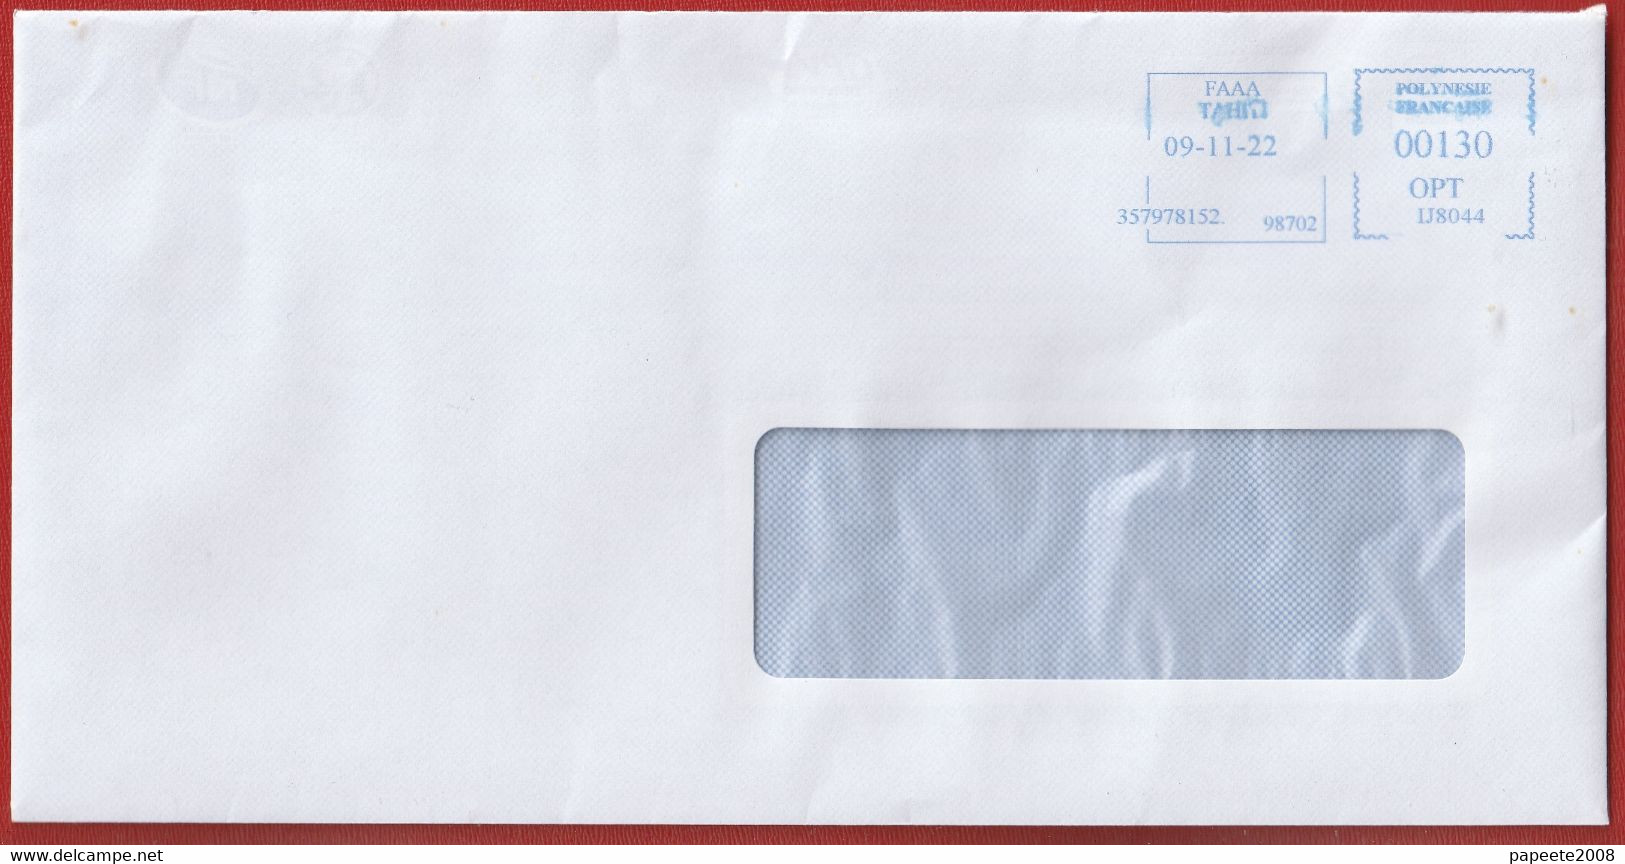 Polynésie Française / Tahiti - 1 Enveloppe / Timbrée En Novembre 2022 / Faa'a - Used Stamps